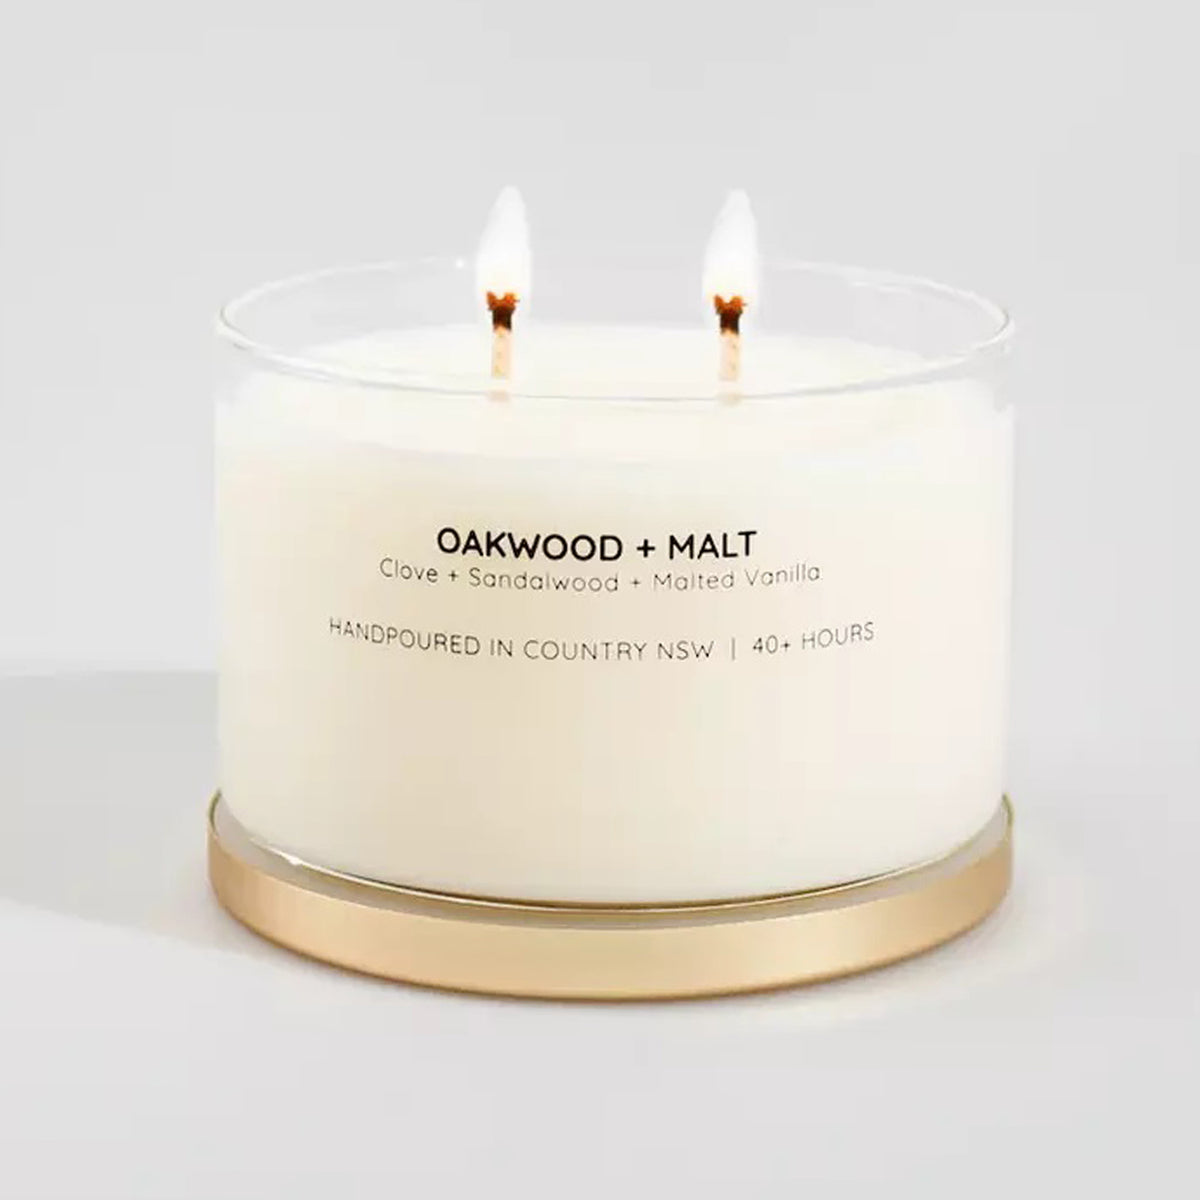 100% Natural Soy Wax "Oakwood & Malt" Candle from Australia (330g)